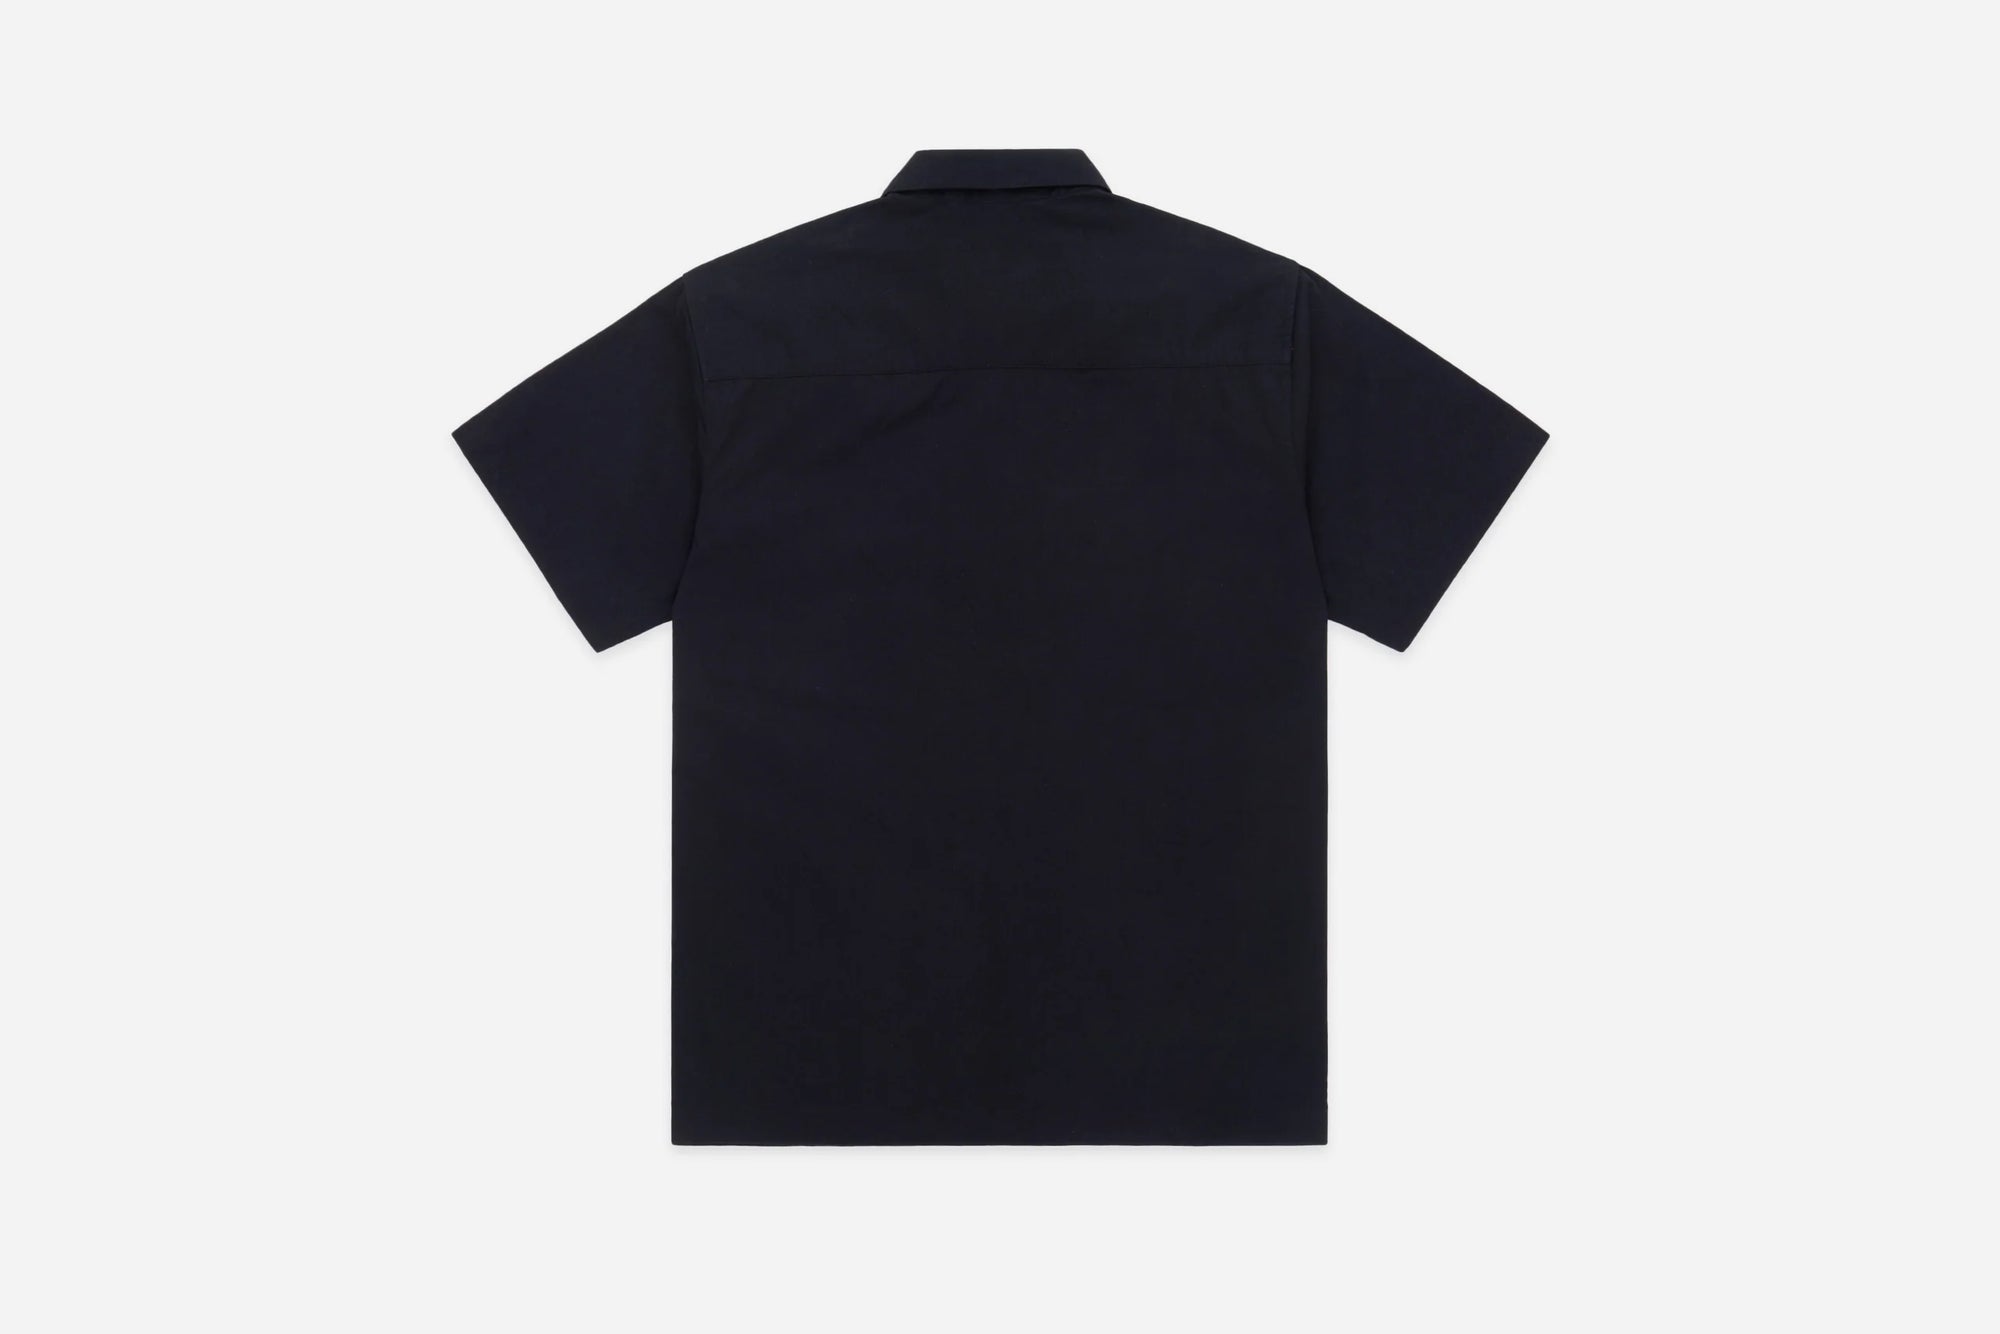 3Sixteen Garage Shirt in Black